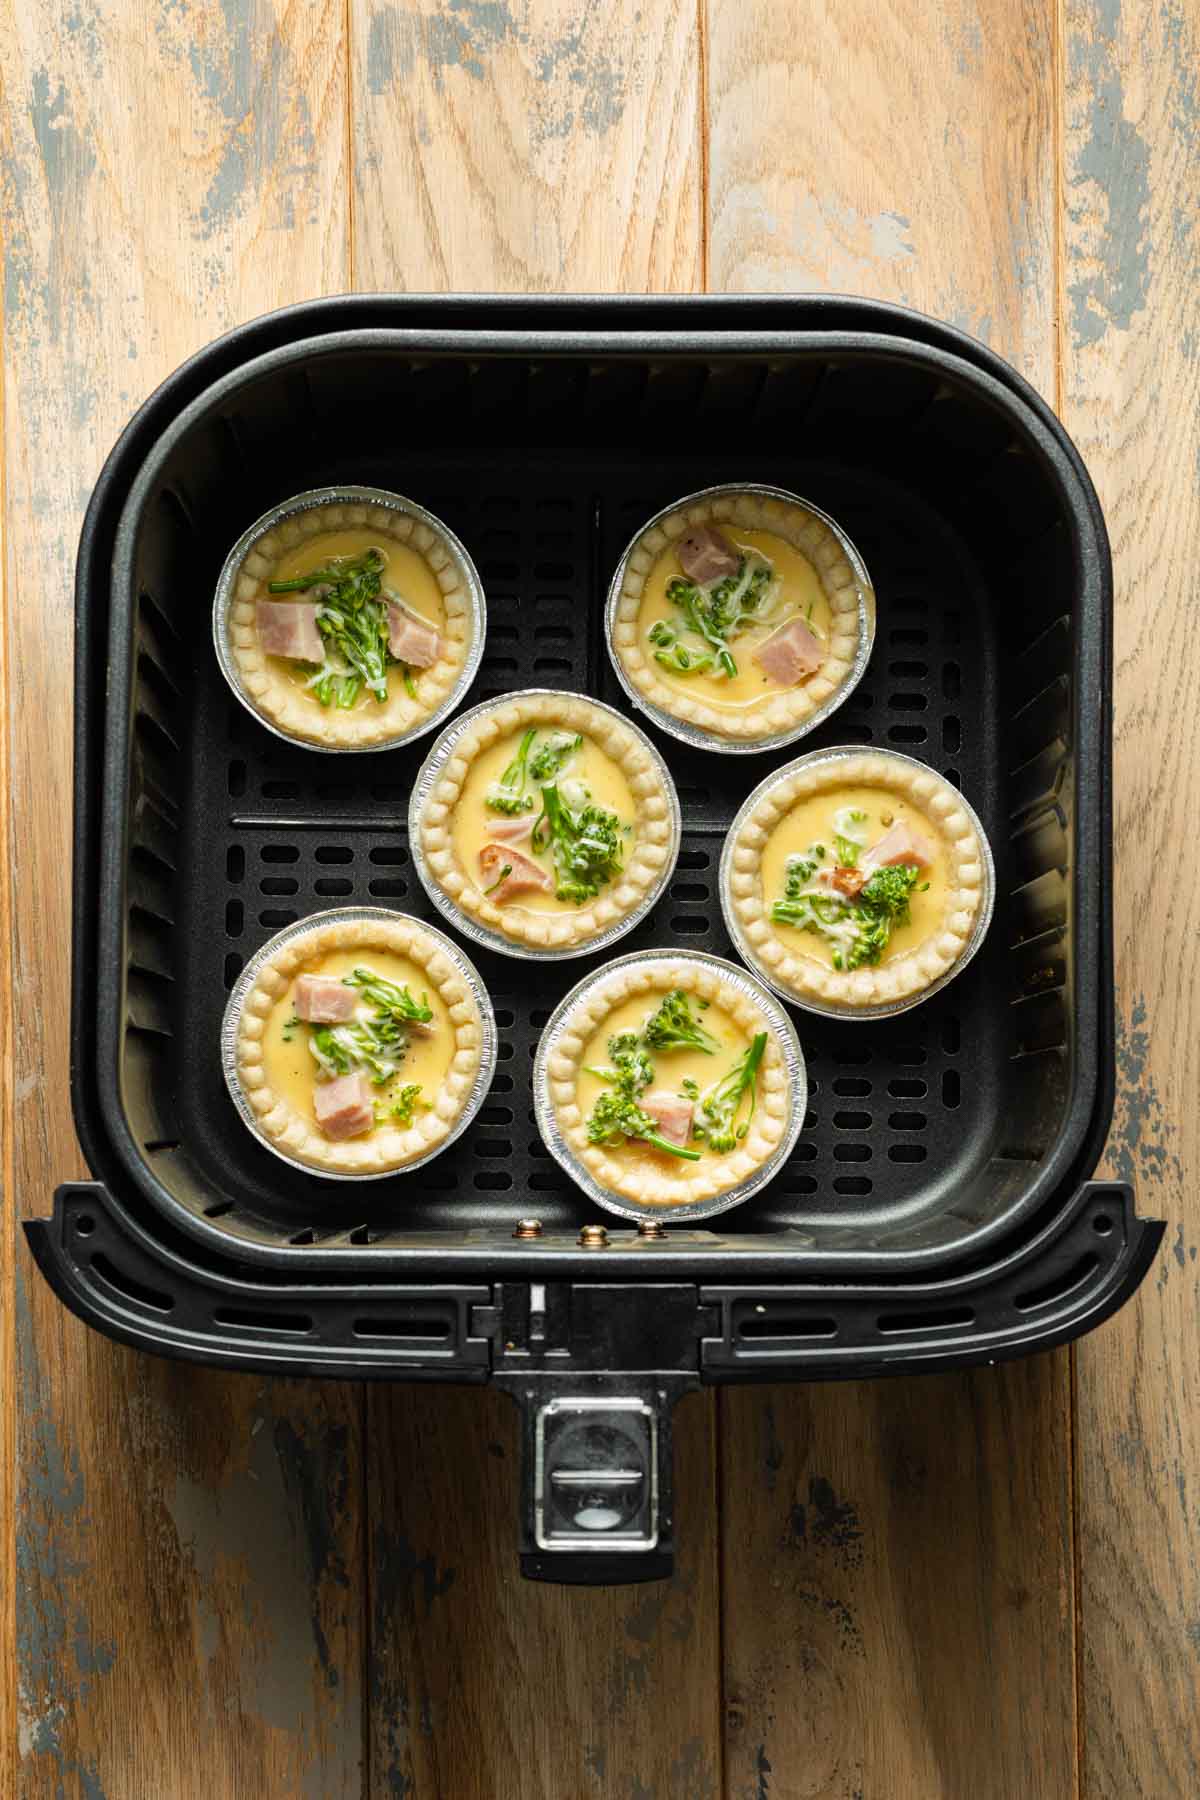 Par-baked tart shells filled with quiche filling in an air fryer basket.